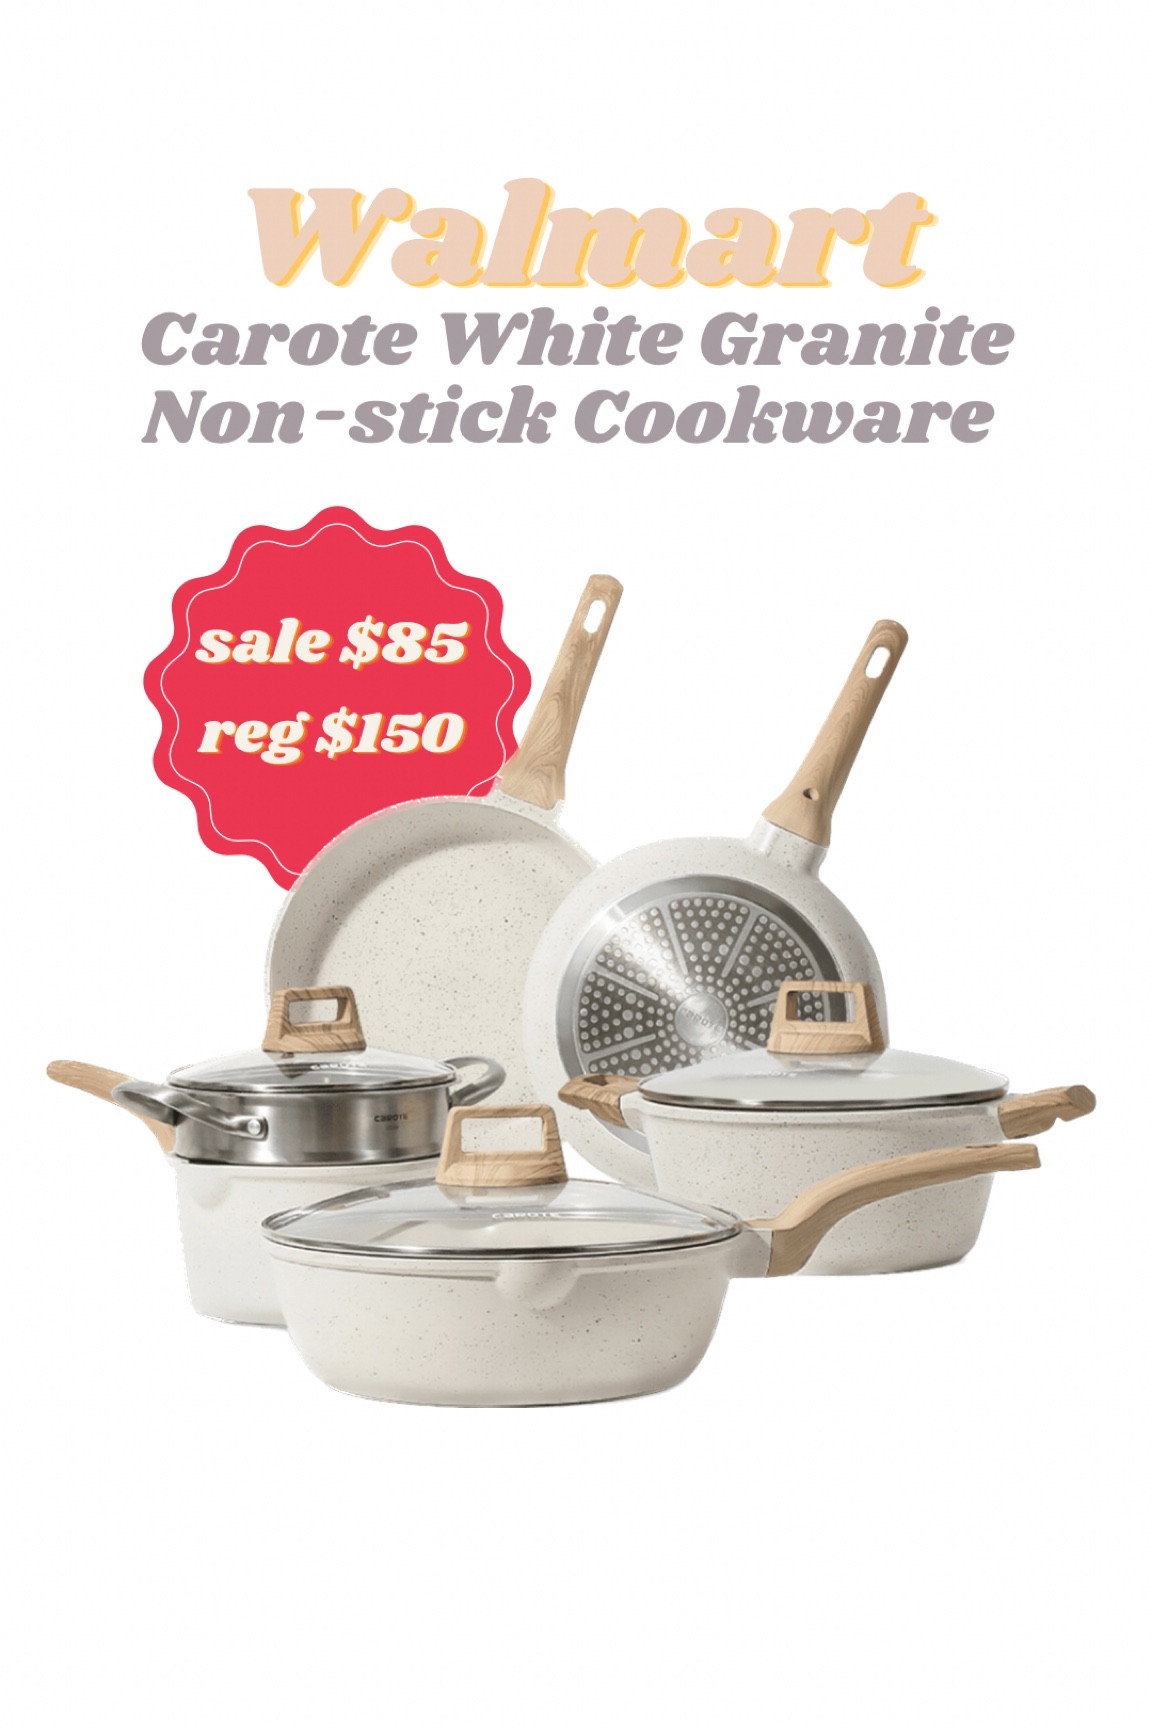 Best Granite Pots Set  Carote White Granite Pots & Pans Review